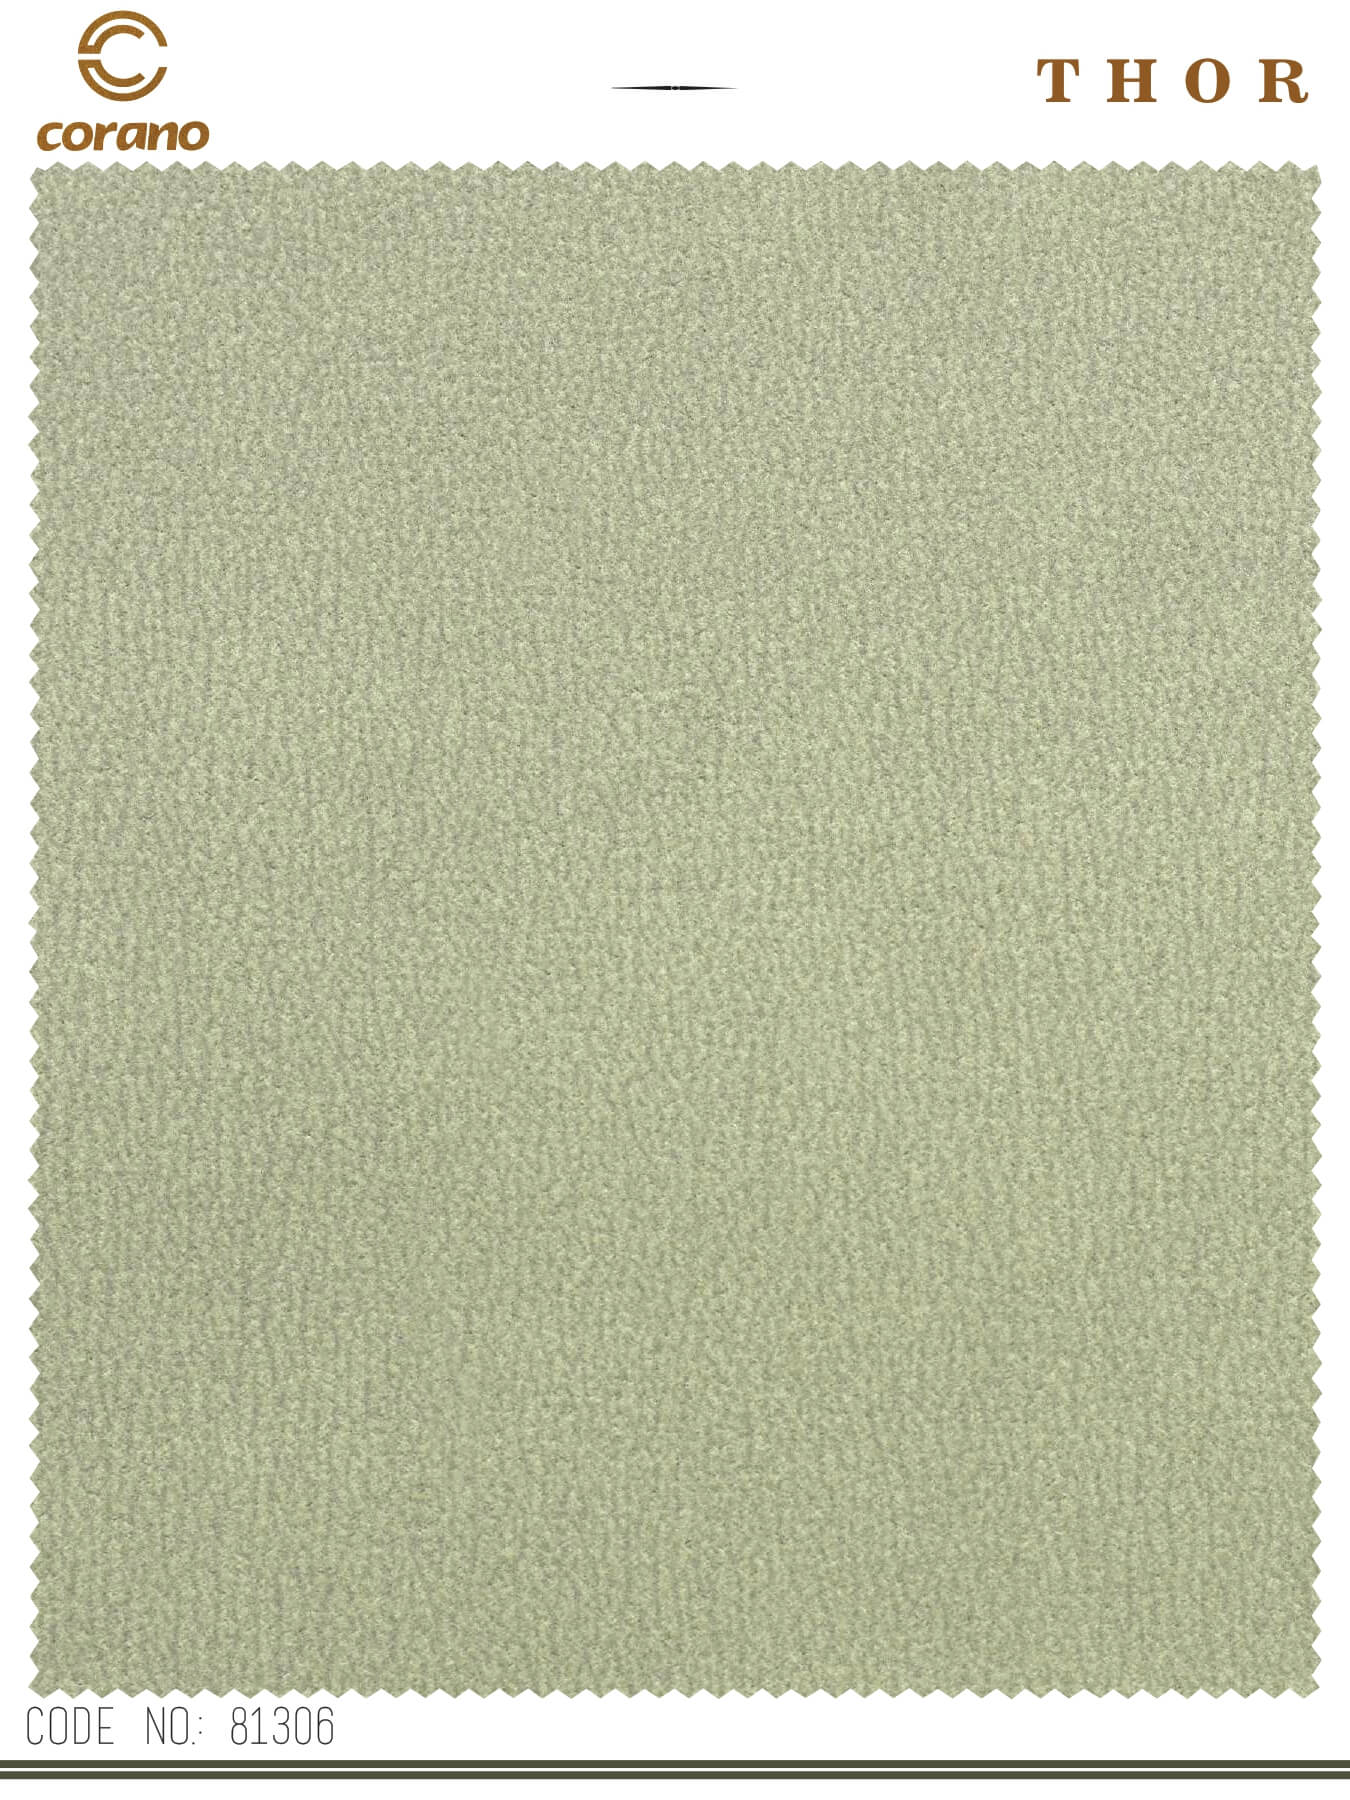 Sofa Fabric Corano Thor 81301